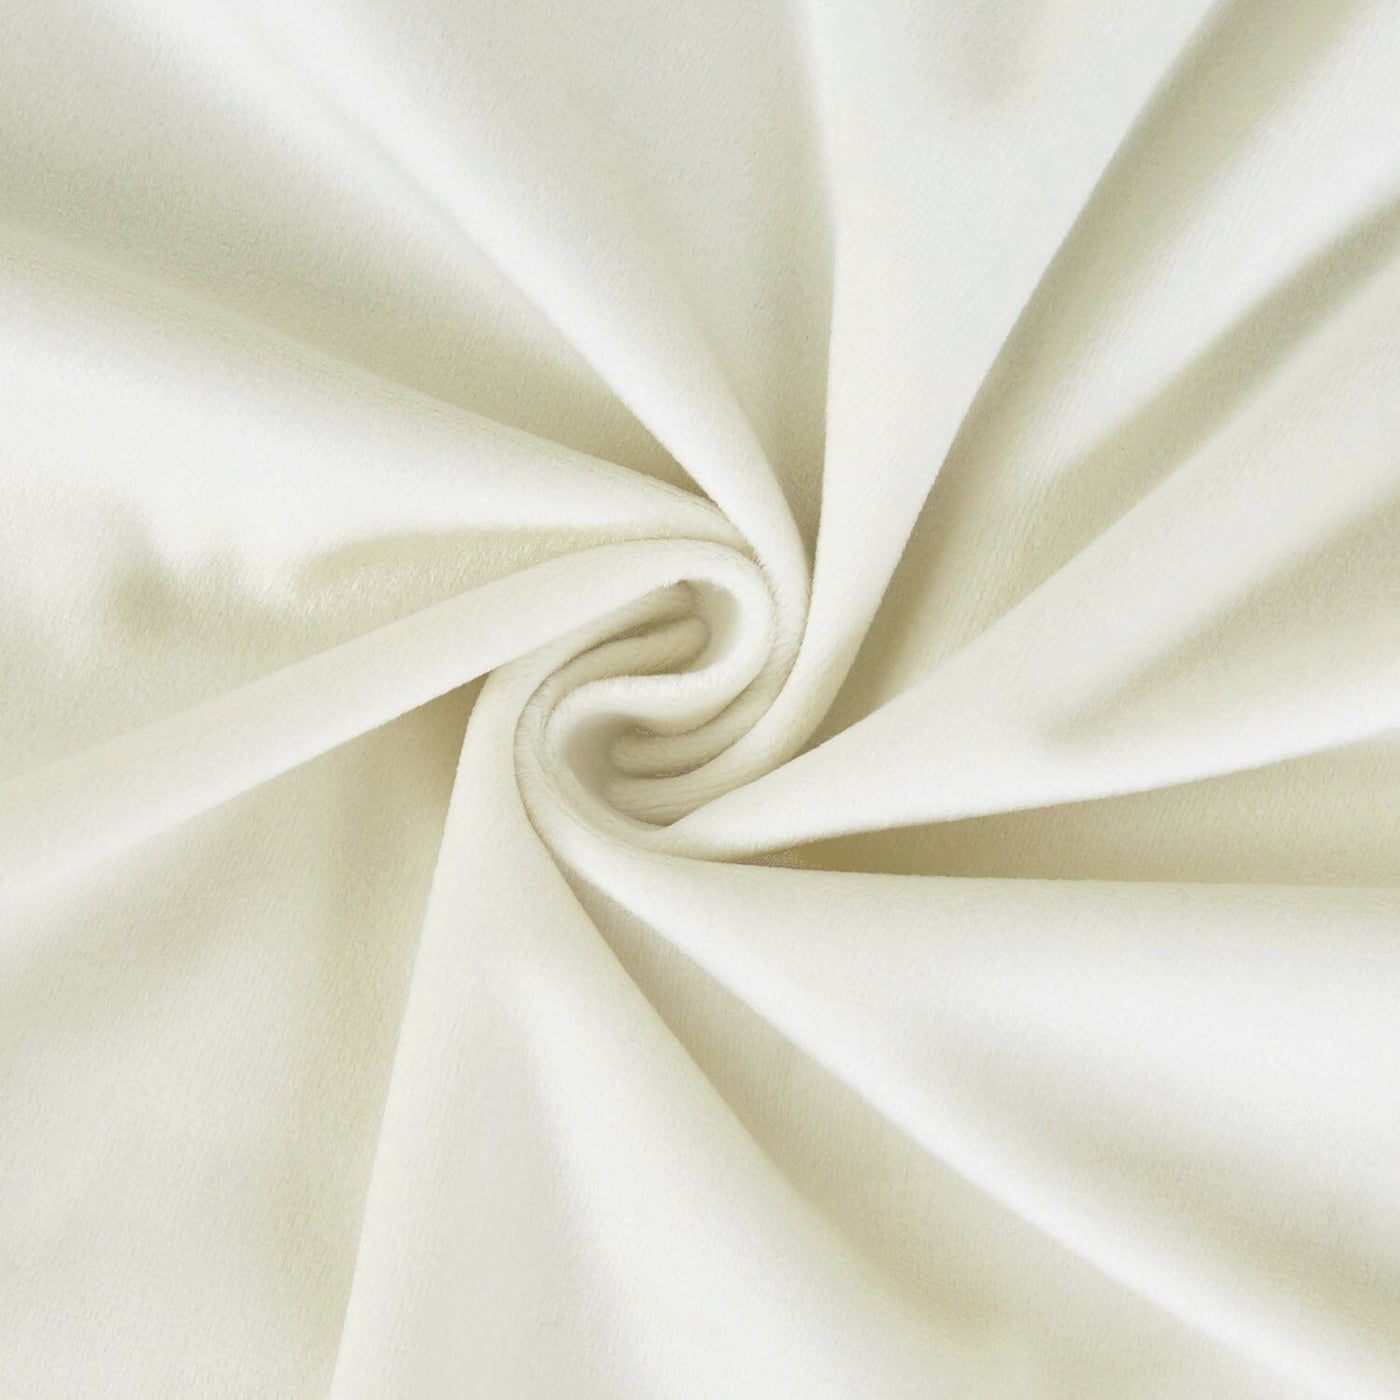 Birkin Velvet Curtain Soft Top